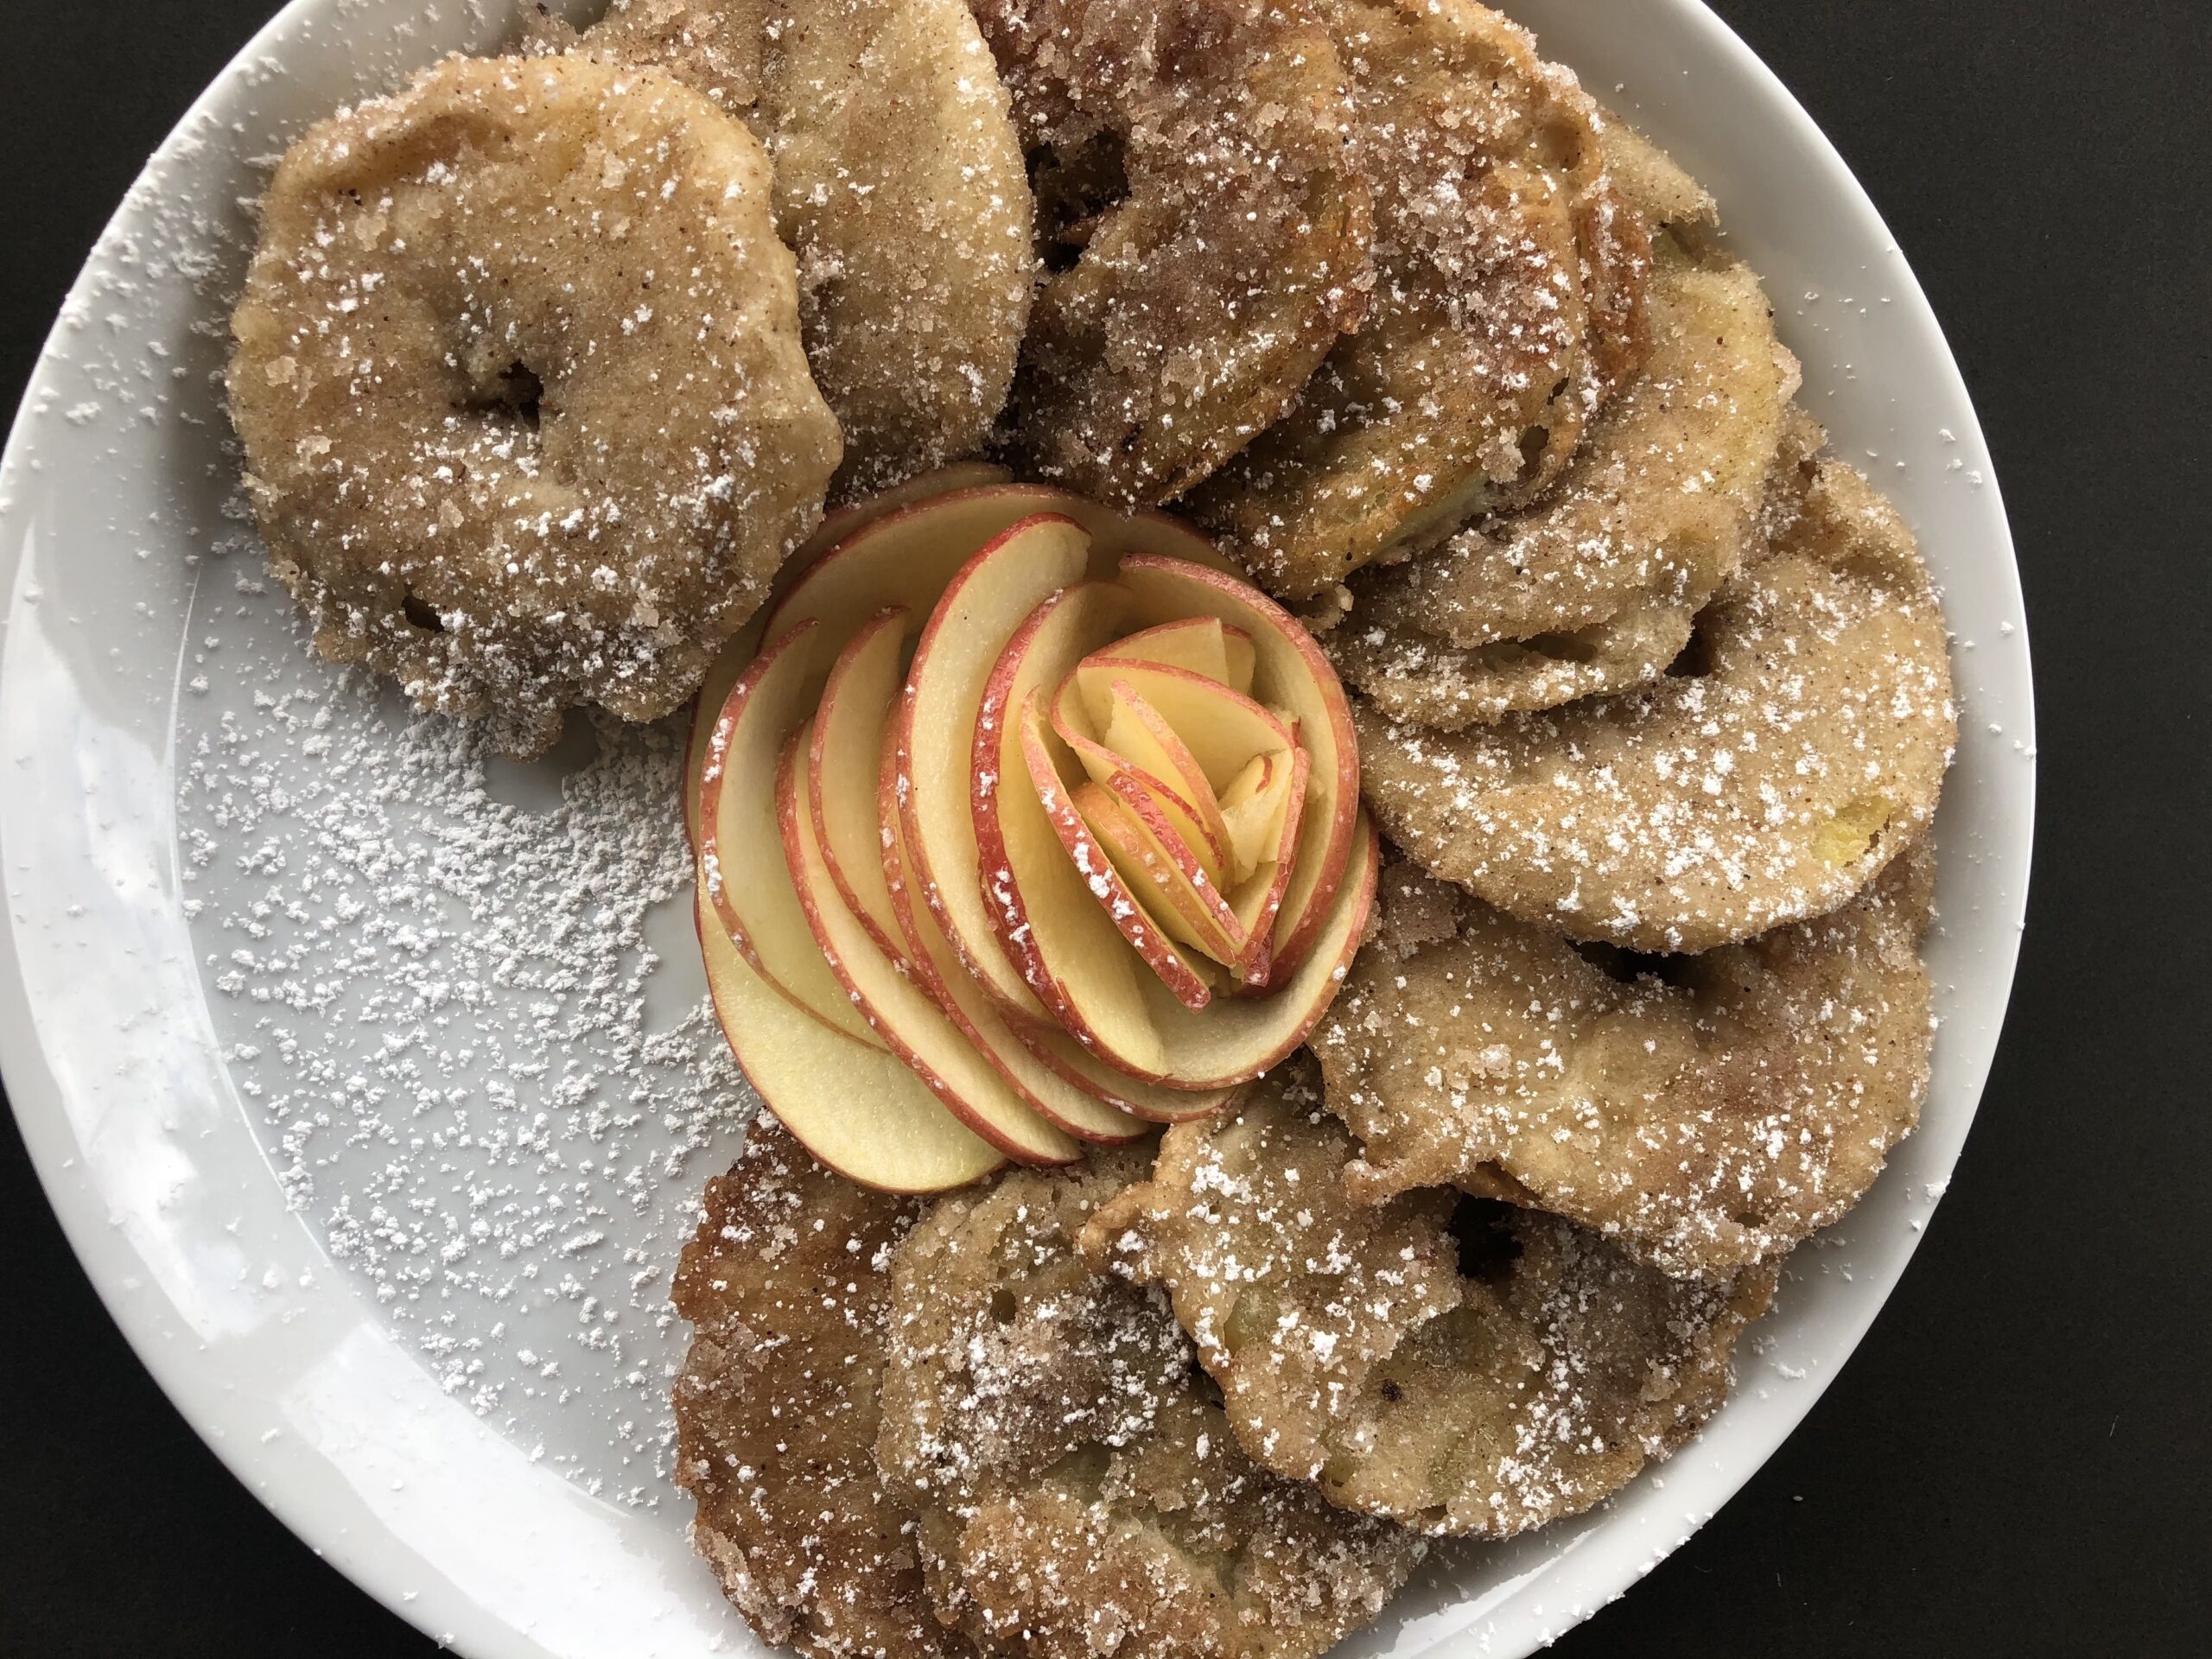 Fried Apple Pie “Doughnuts” by Gabi Frohlich | @bakedbygabi